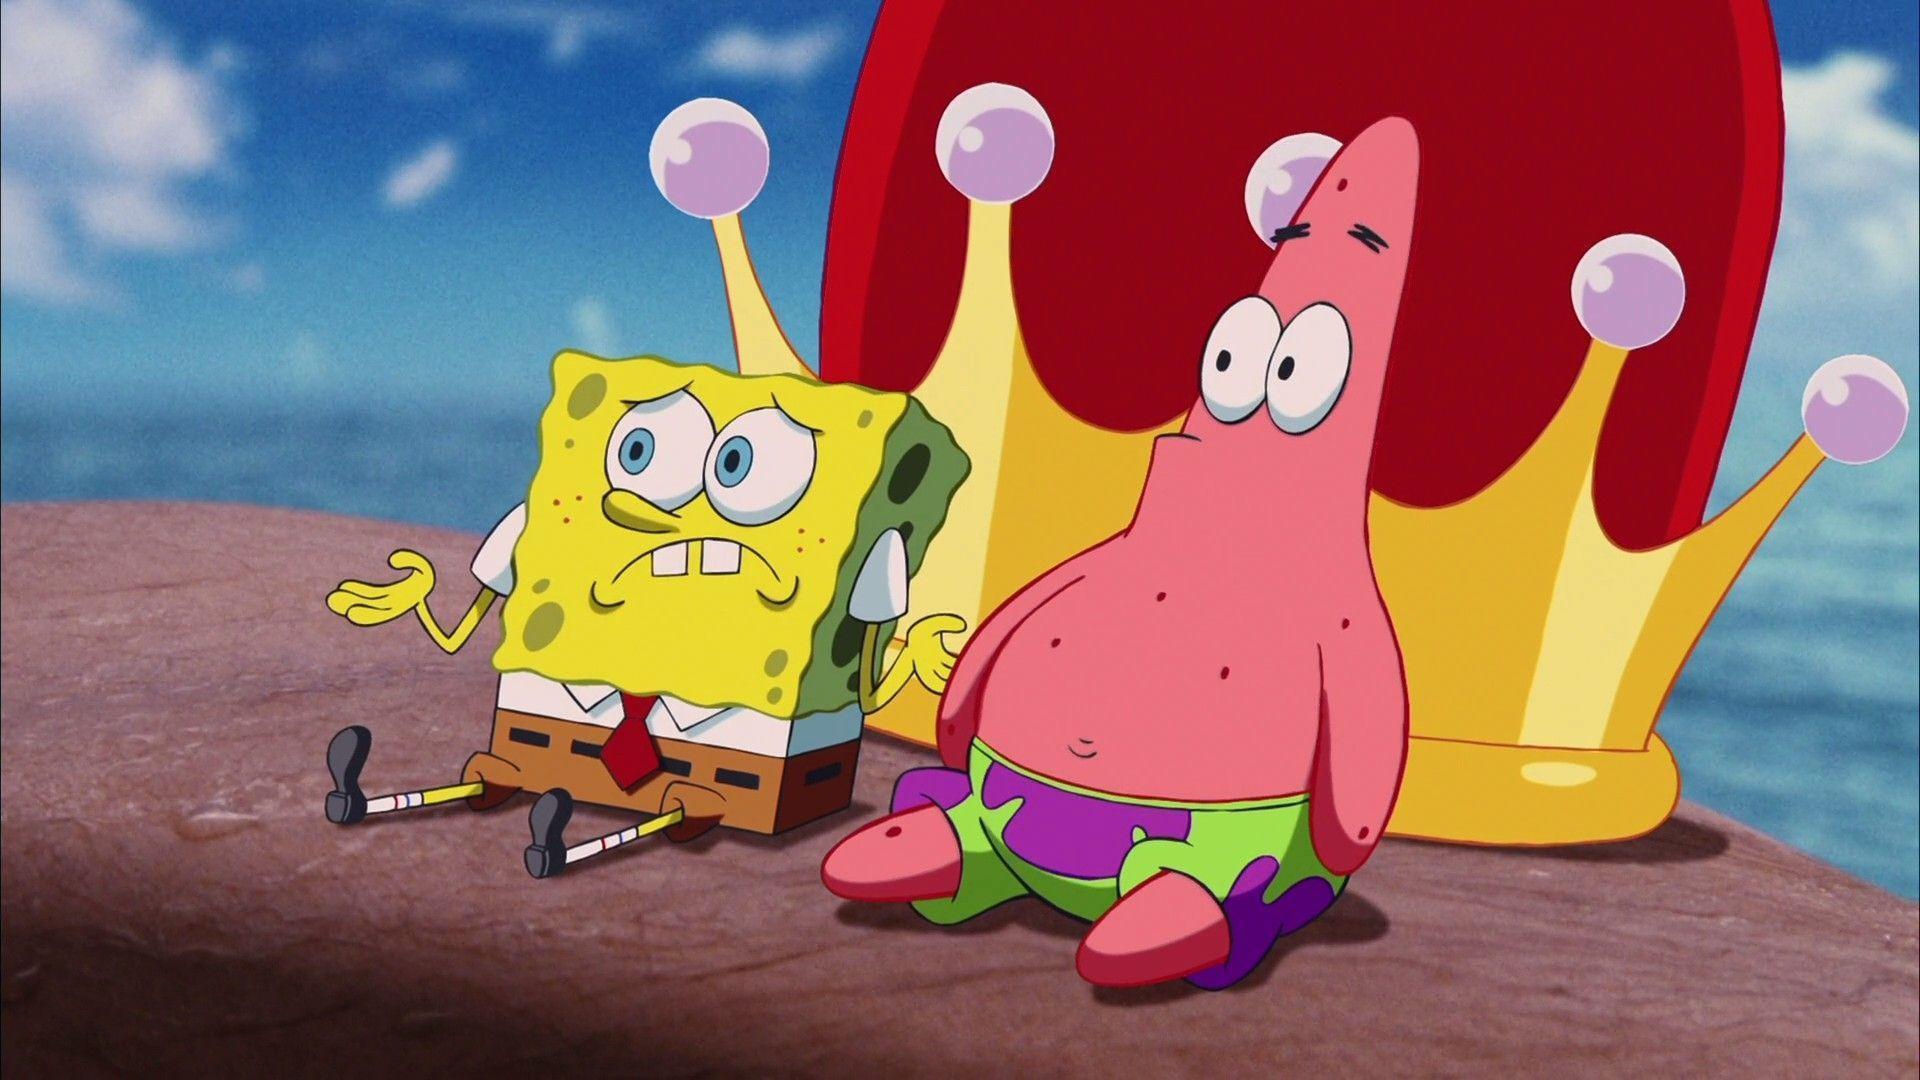 Funny Spongebob and Patrick Wallpaper. hdwallpaper